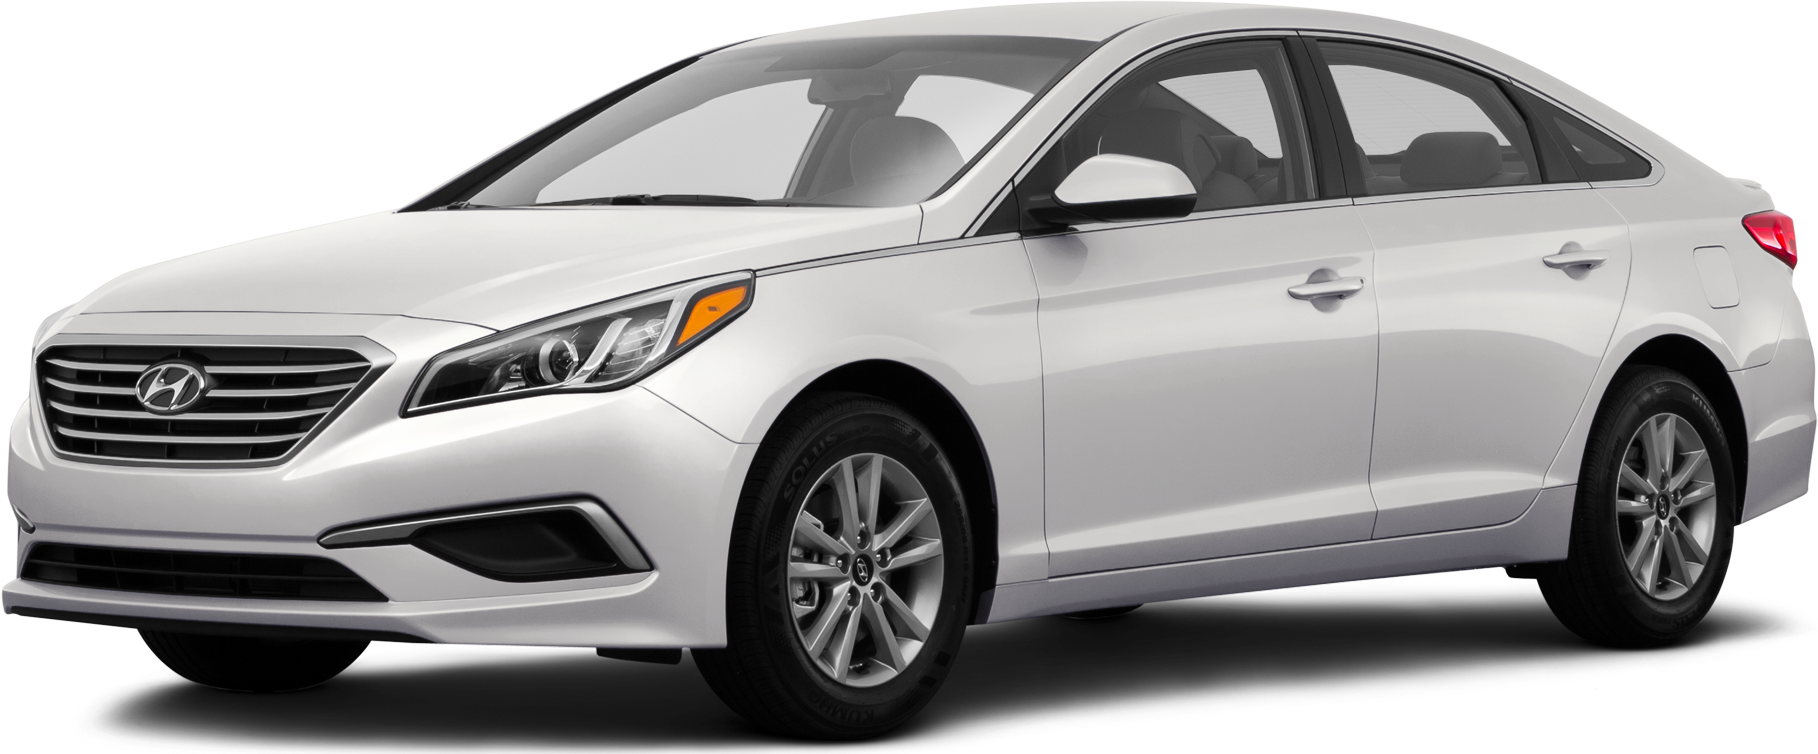 2017 Hyundai Sonata Values & Cars for Sale  Kelley Blue Book